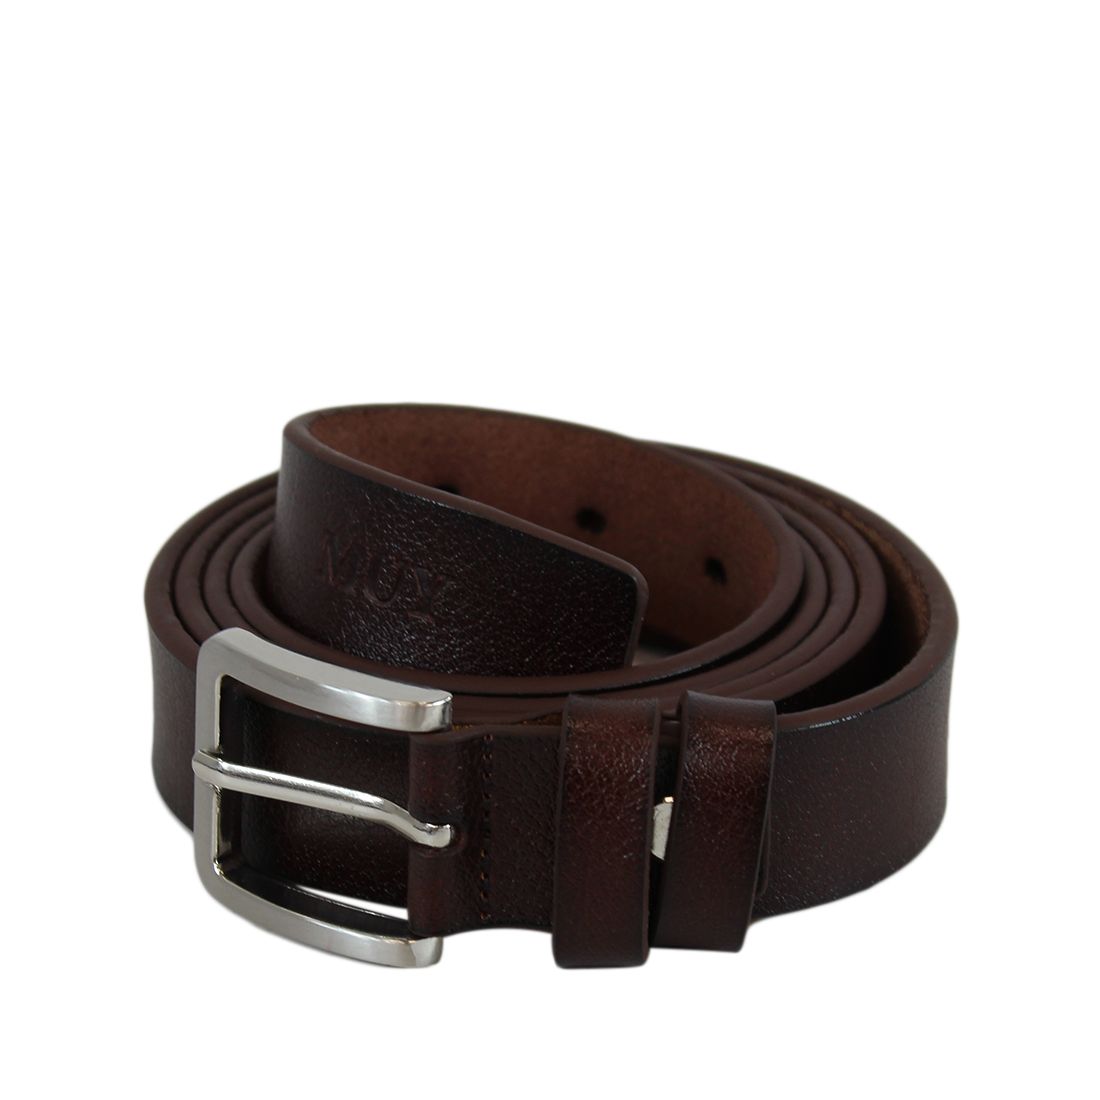 Real leather narrow plain belt